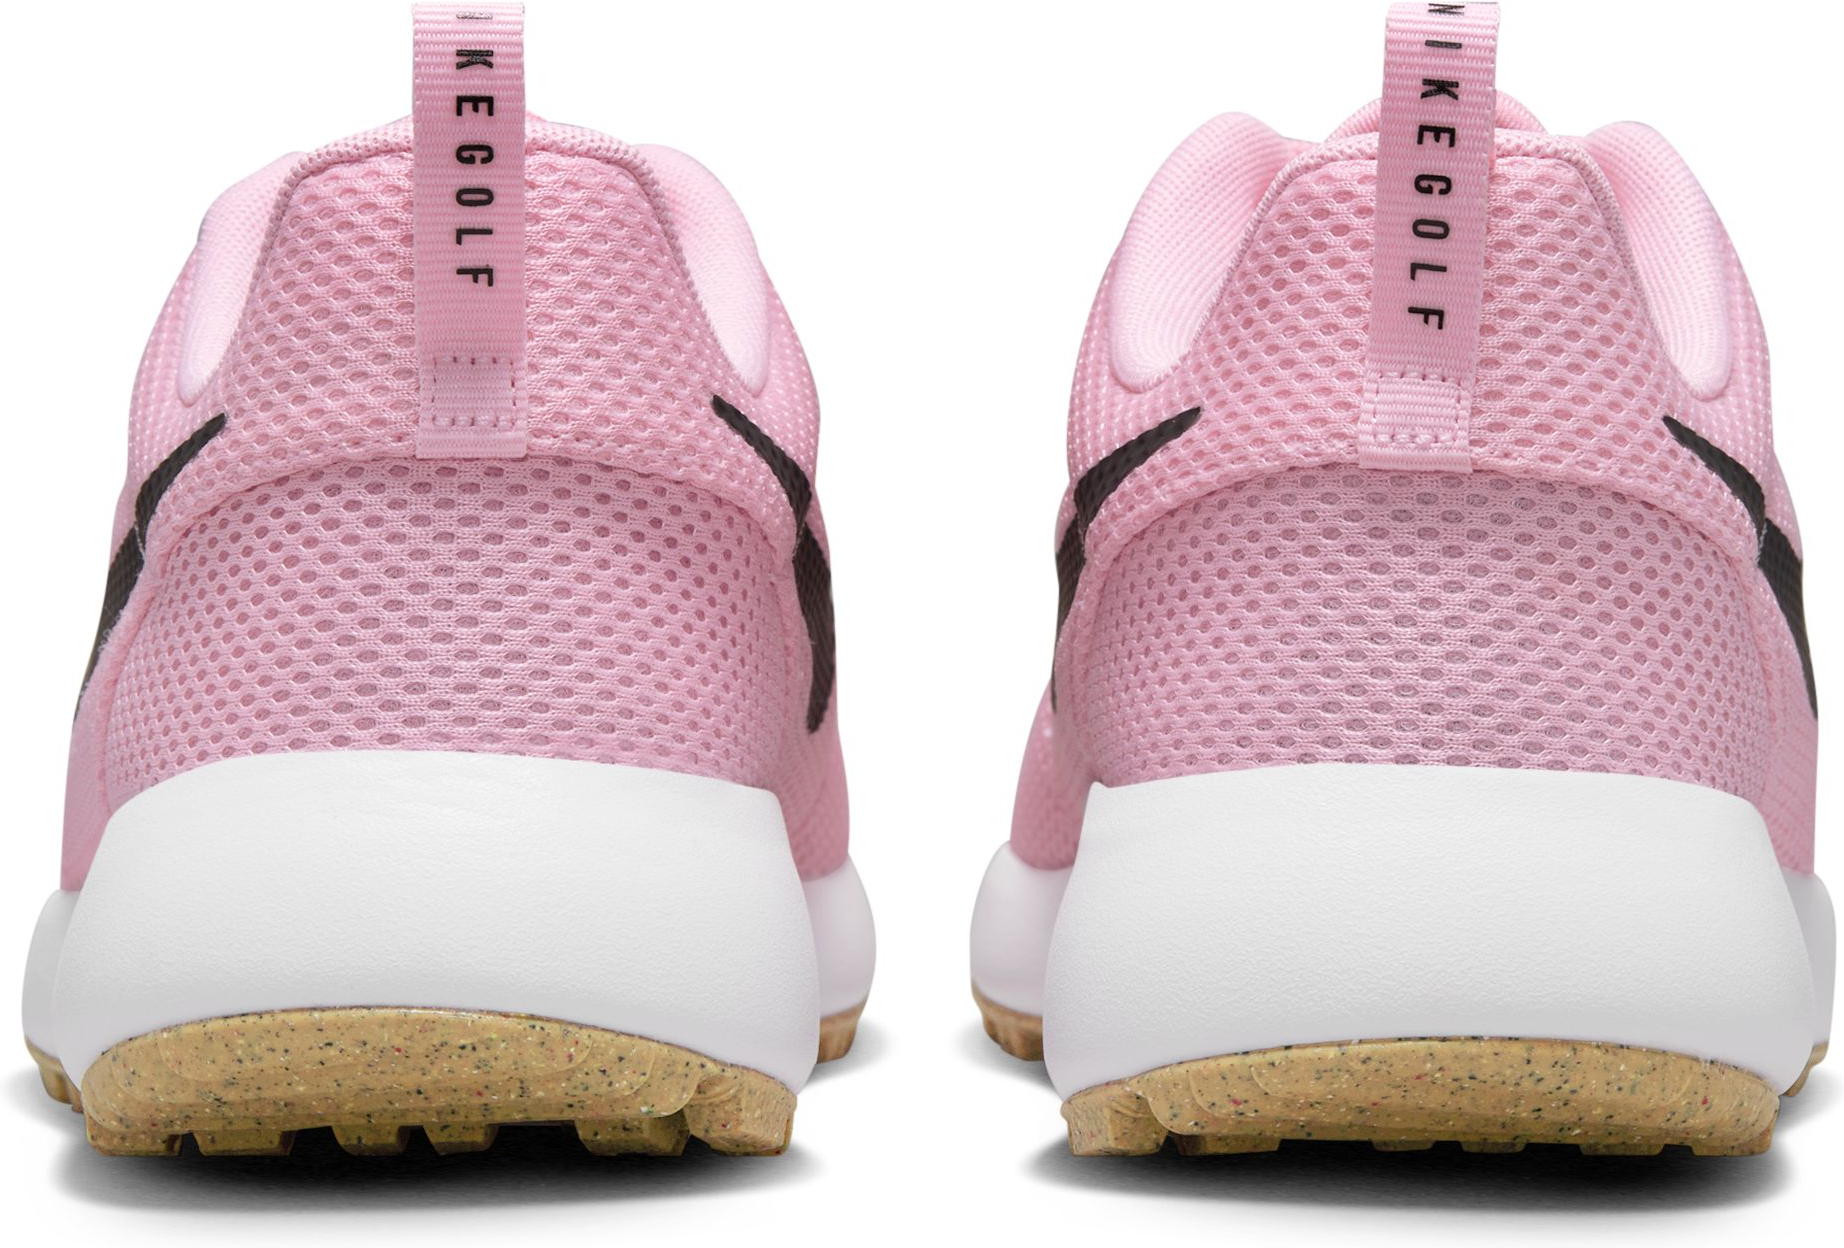 Nike ROSHE G 2.0 Golfschuh, pink/black/white